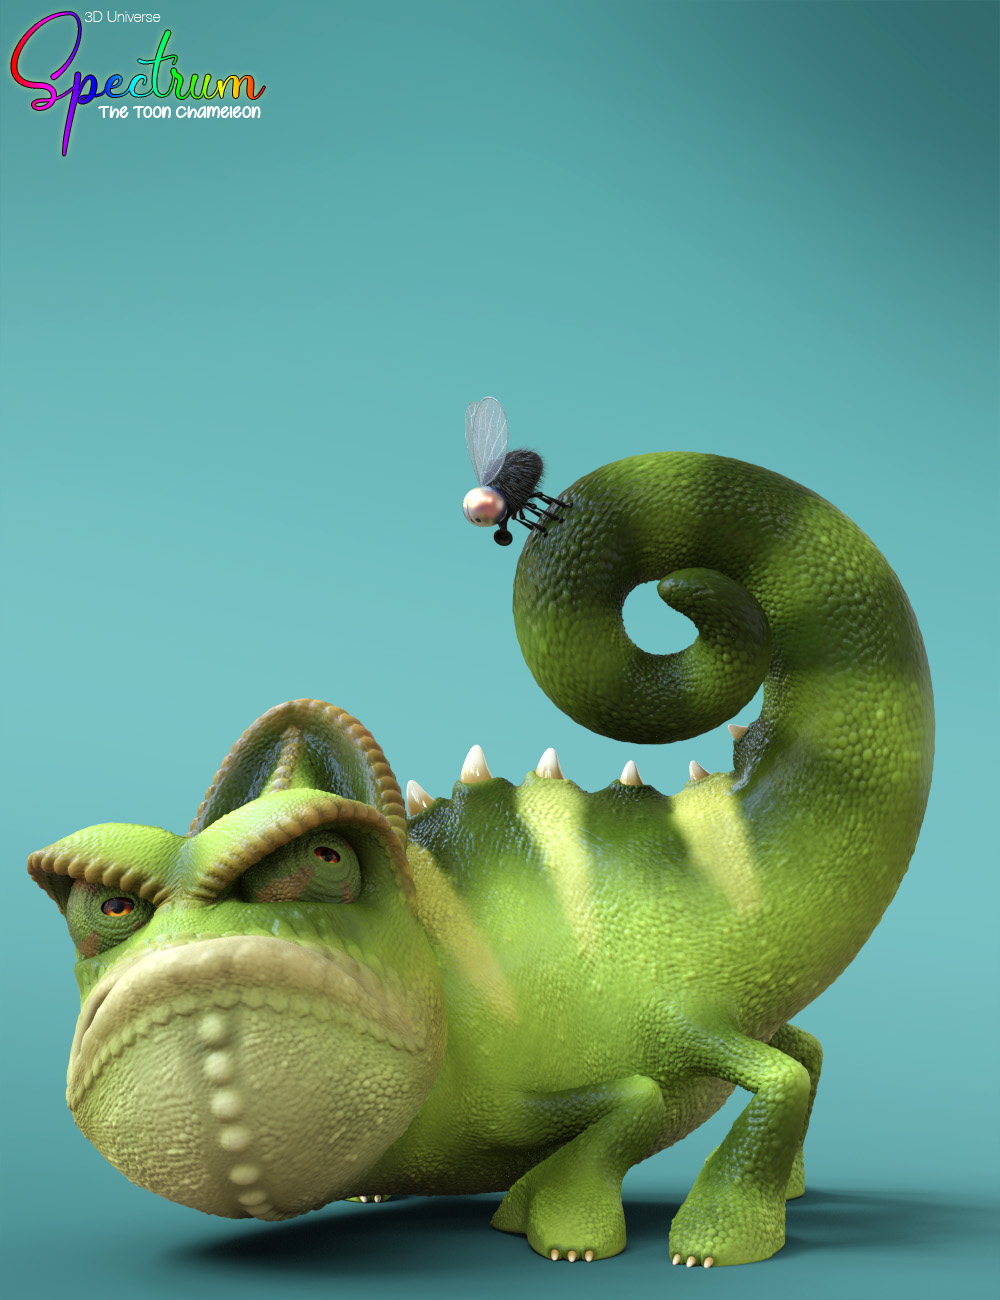 Cartoon Chameleon by: 3D Universe, 3D Models by Daz 3D